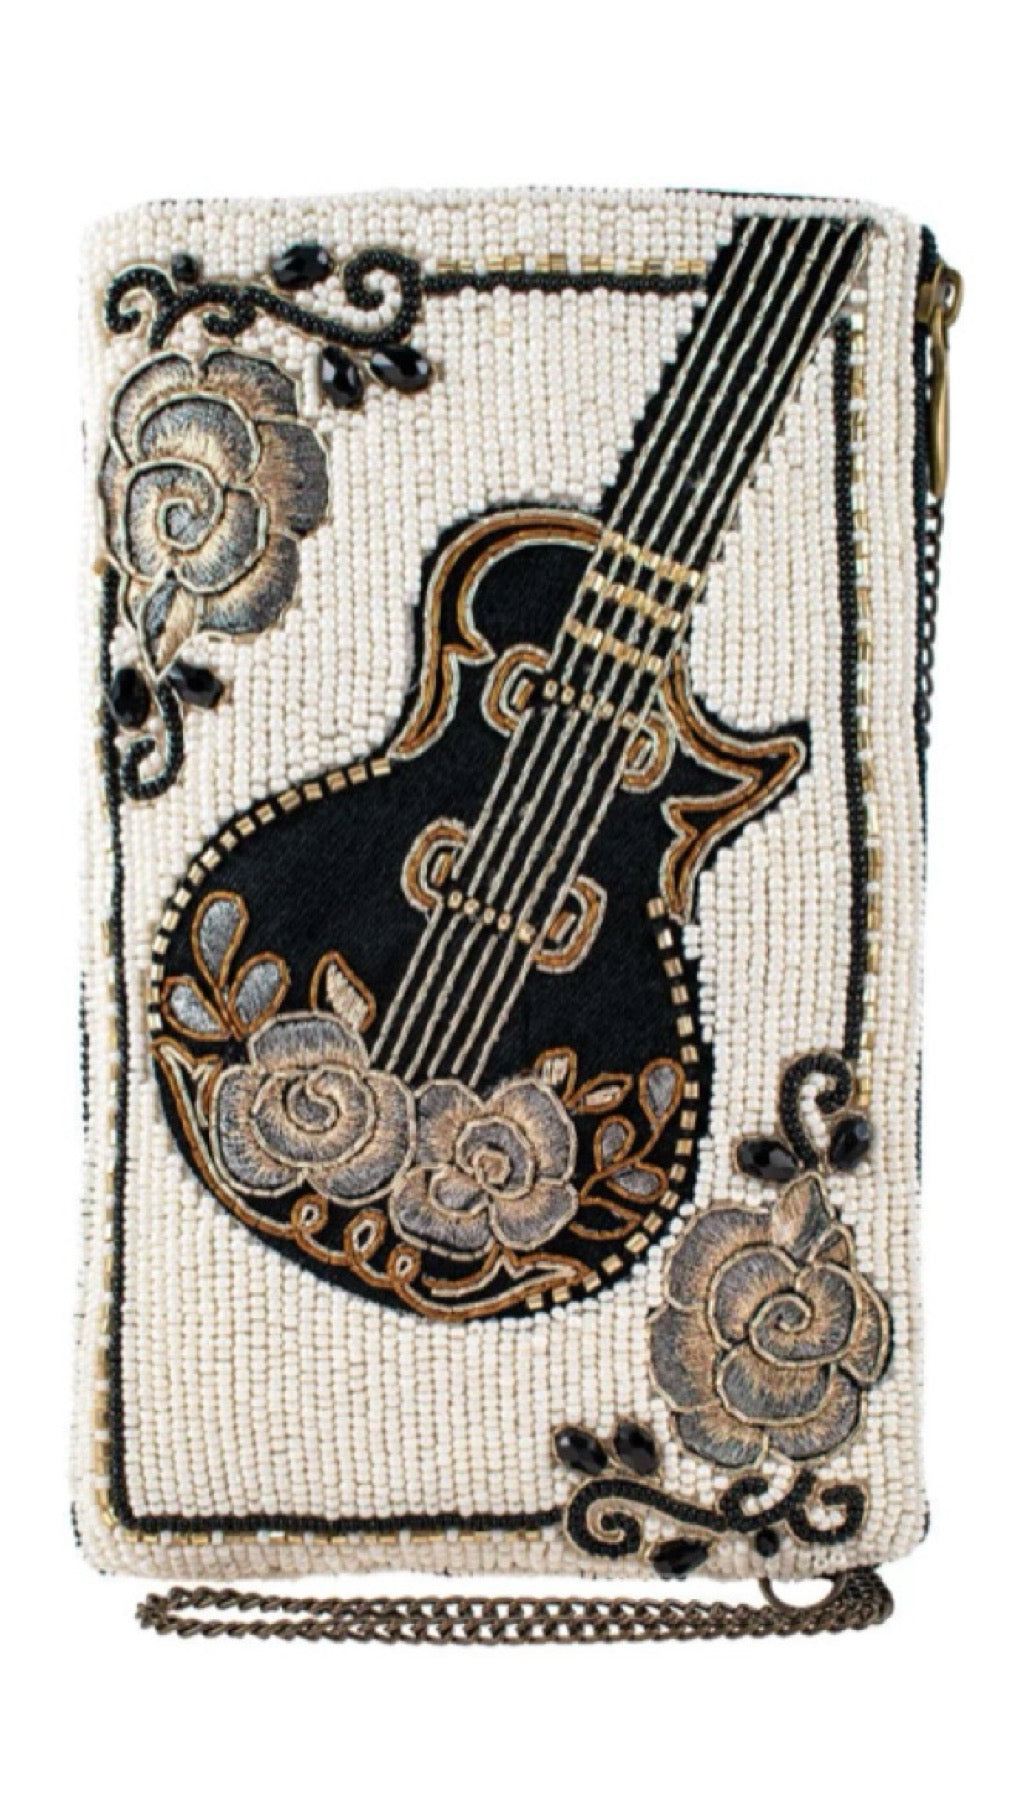 Mary Frances Guitar Player Handbag   Mary Frances Beaded Bag